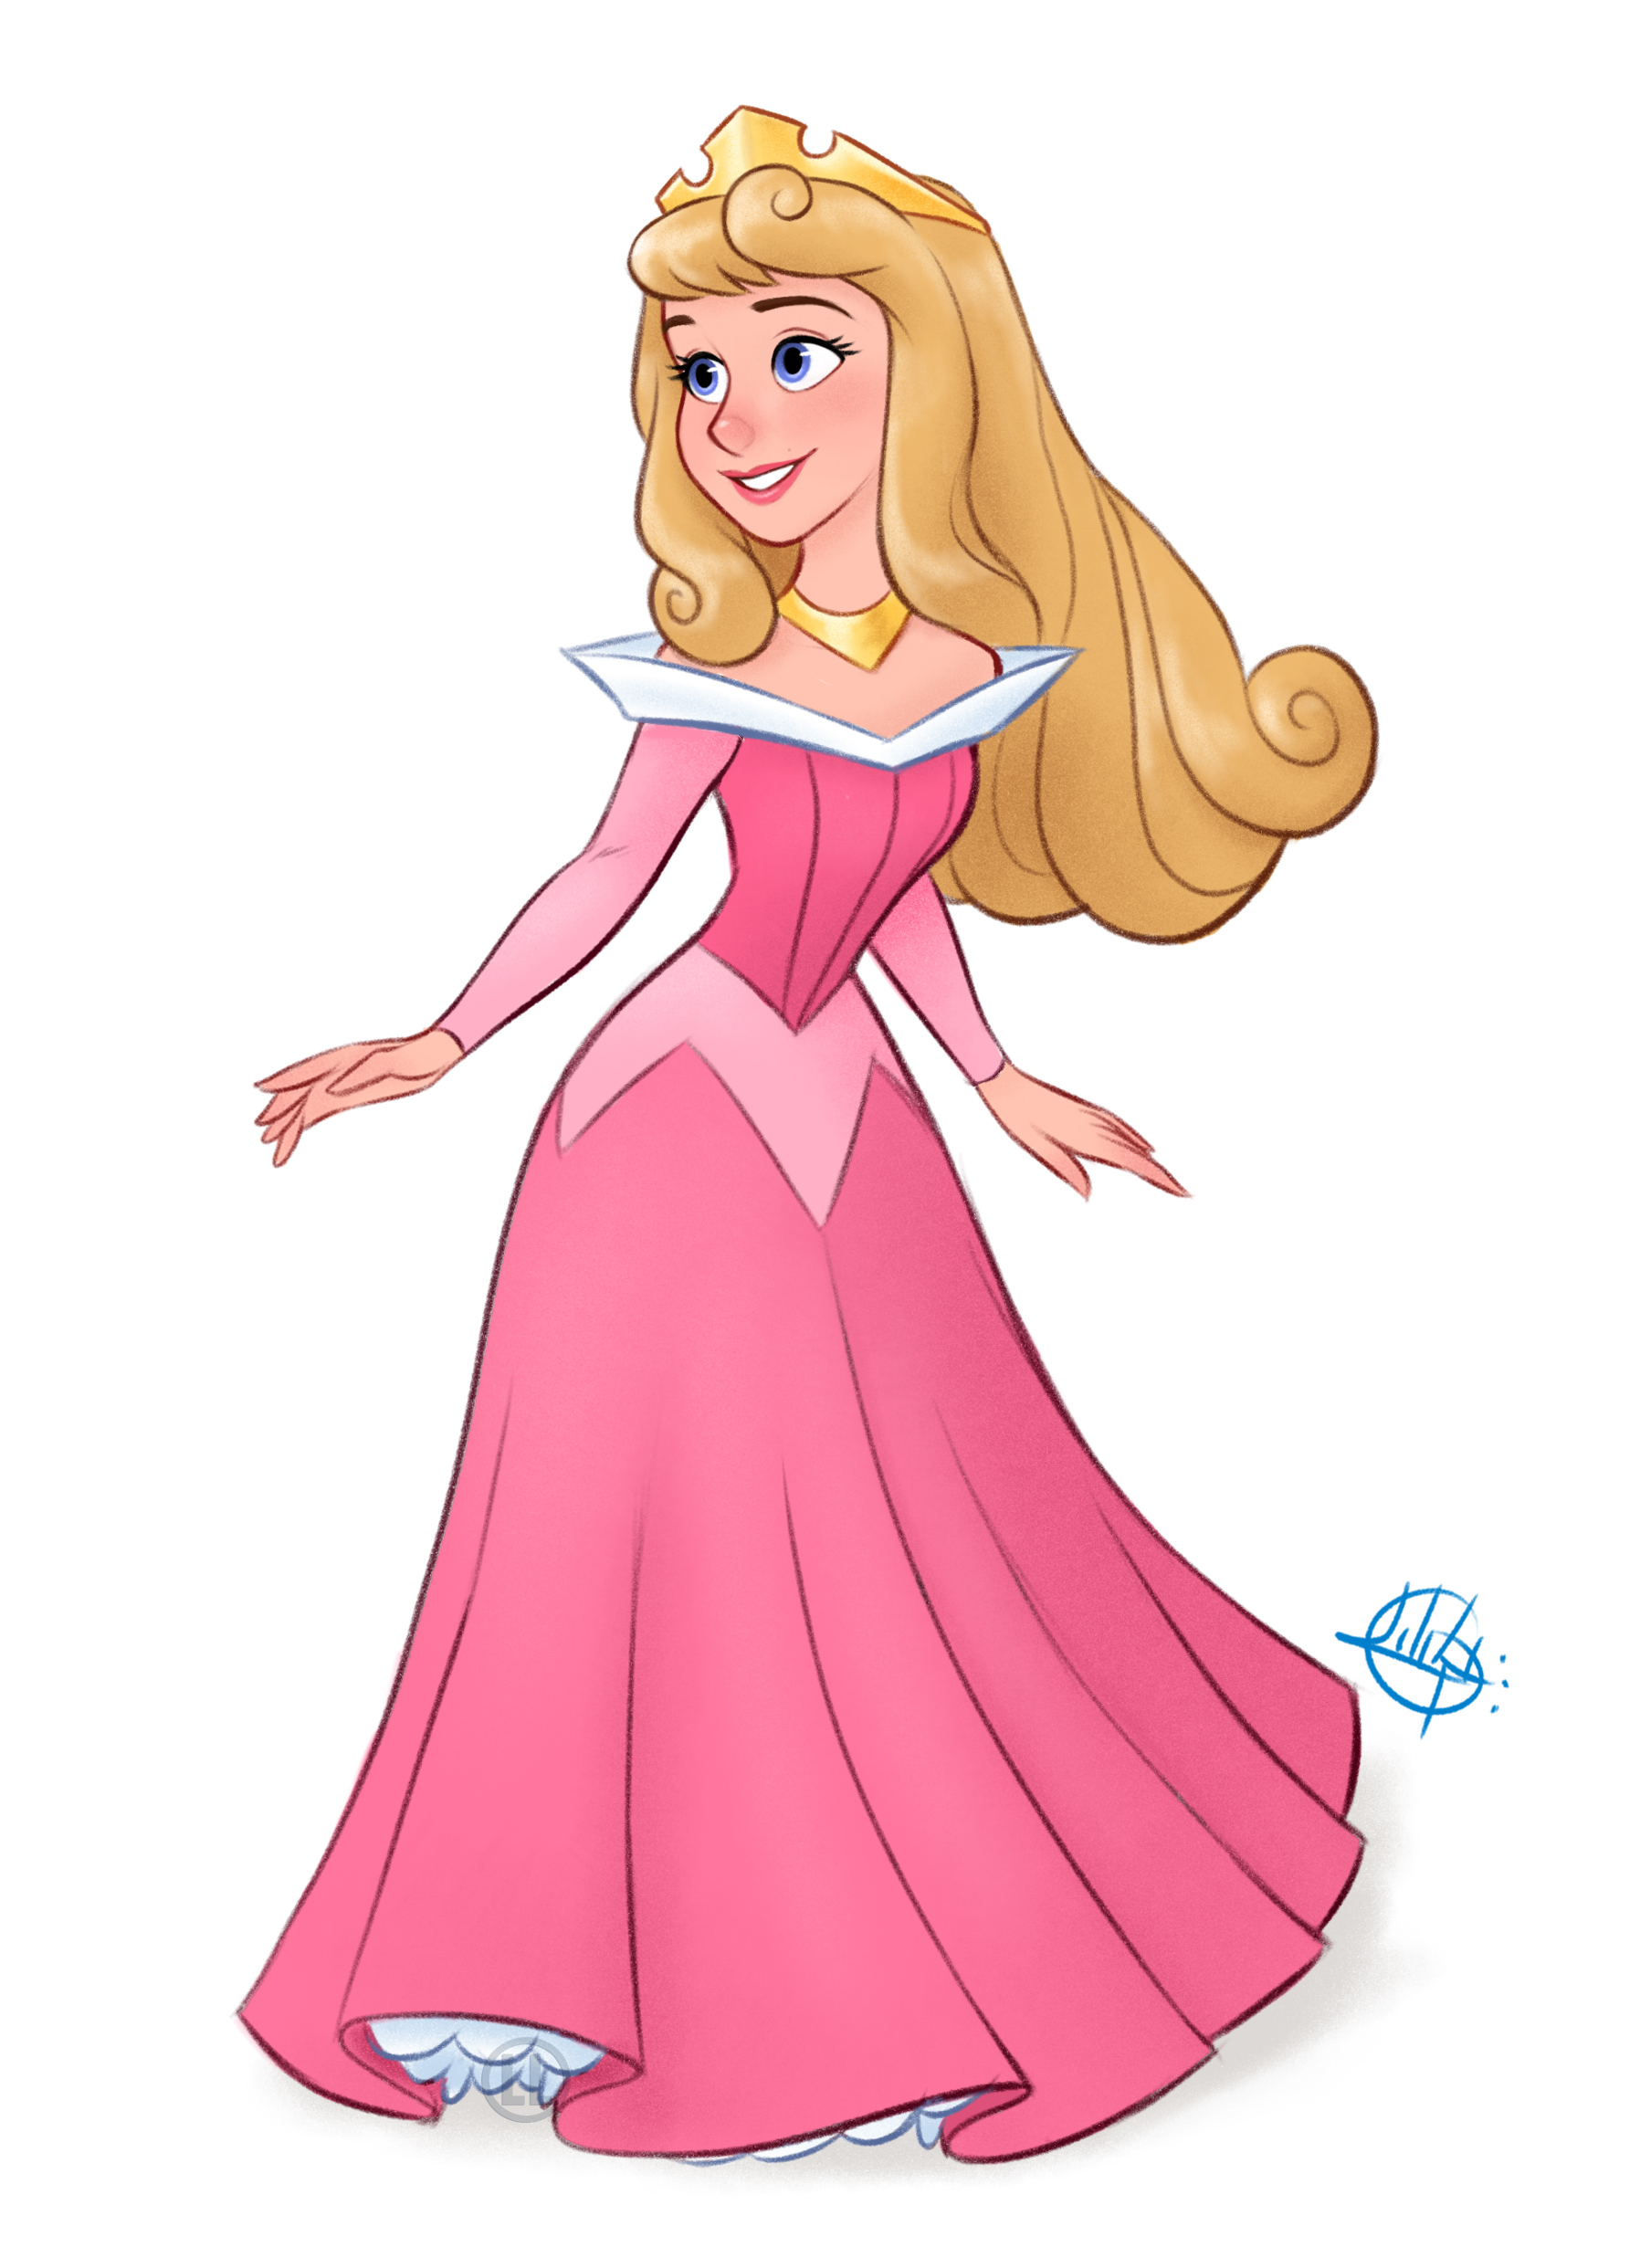 Disney Princess Character design.